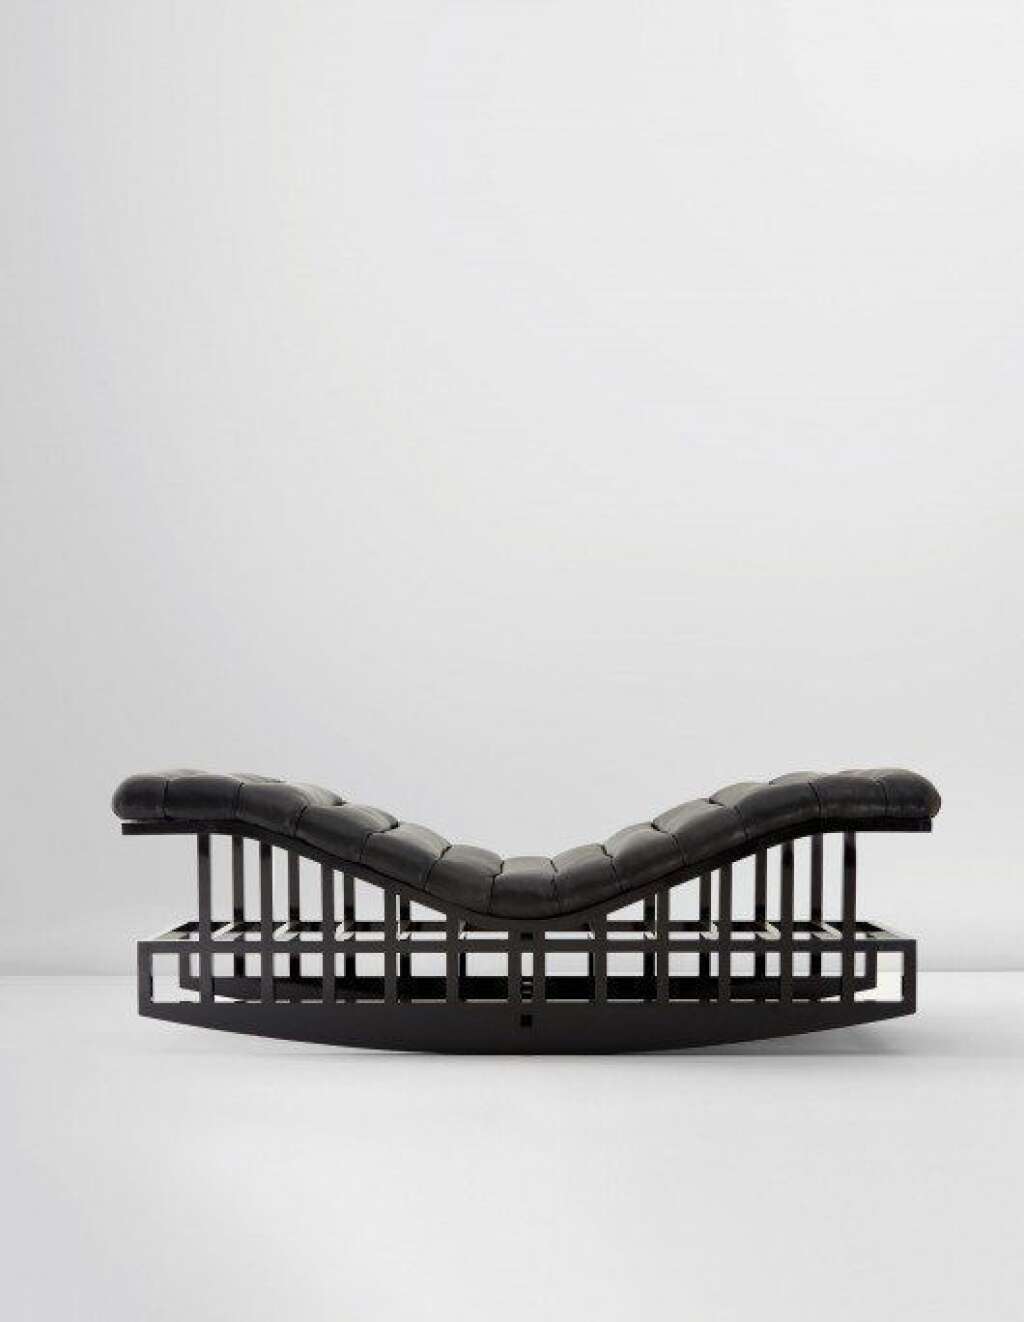 Richard Meier : "Rocking chaise longue" -